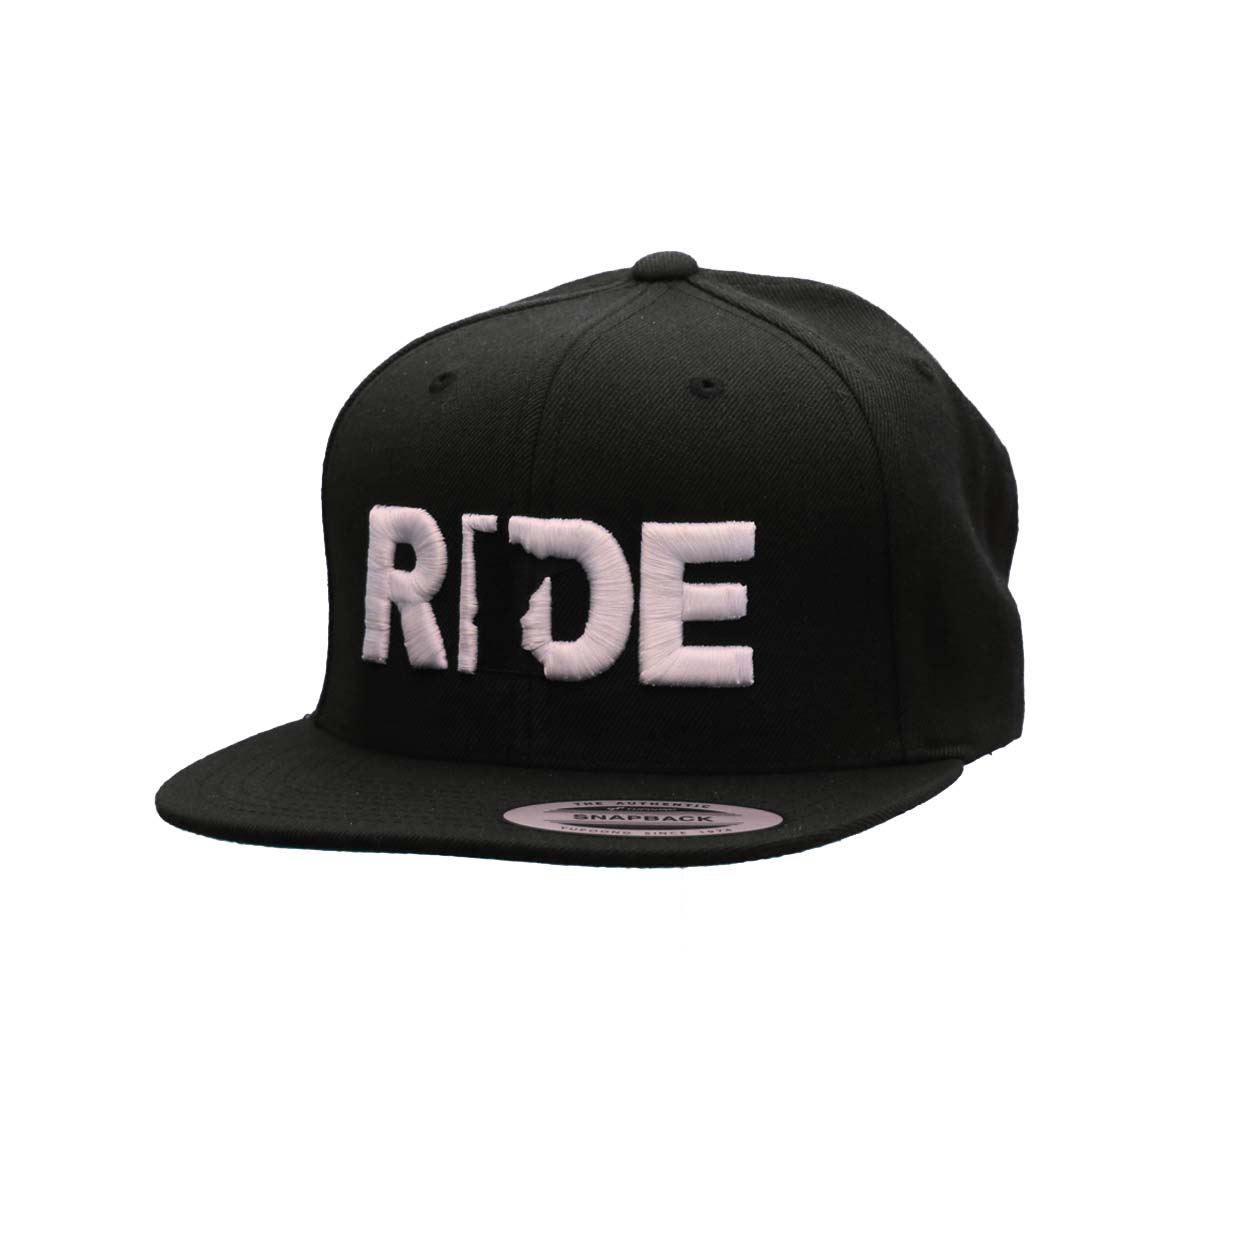 Ride Minnesota Classic Embroidered Snapback Flat Brim Hat Black